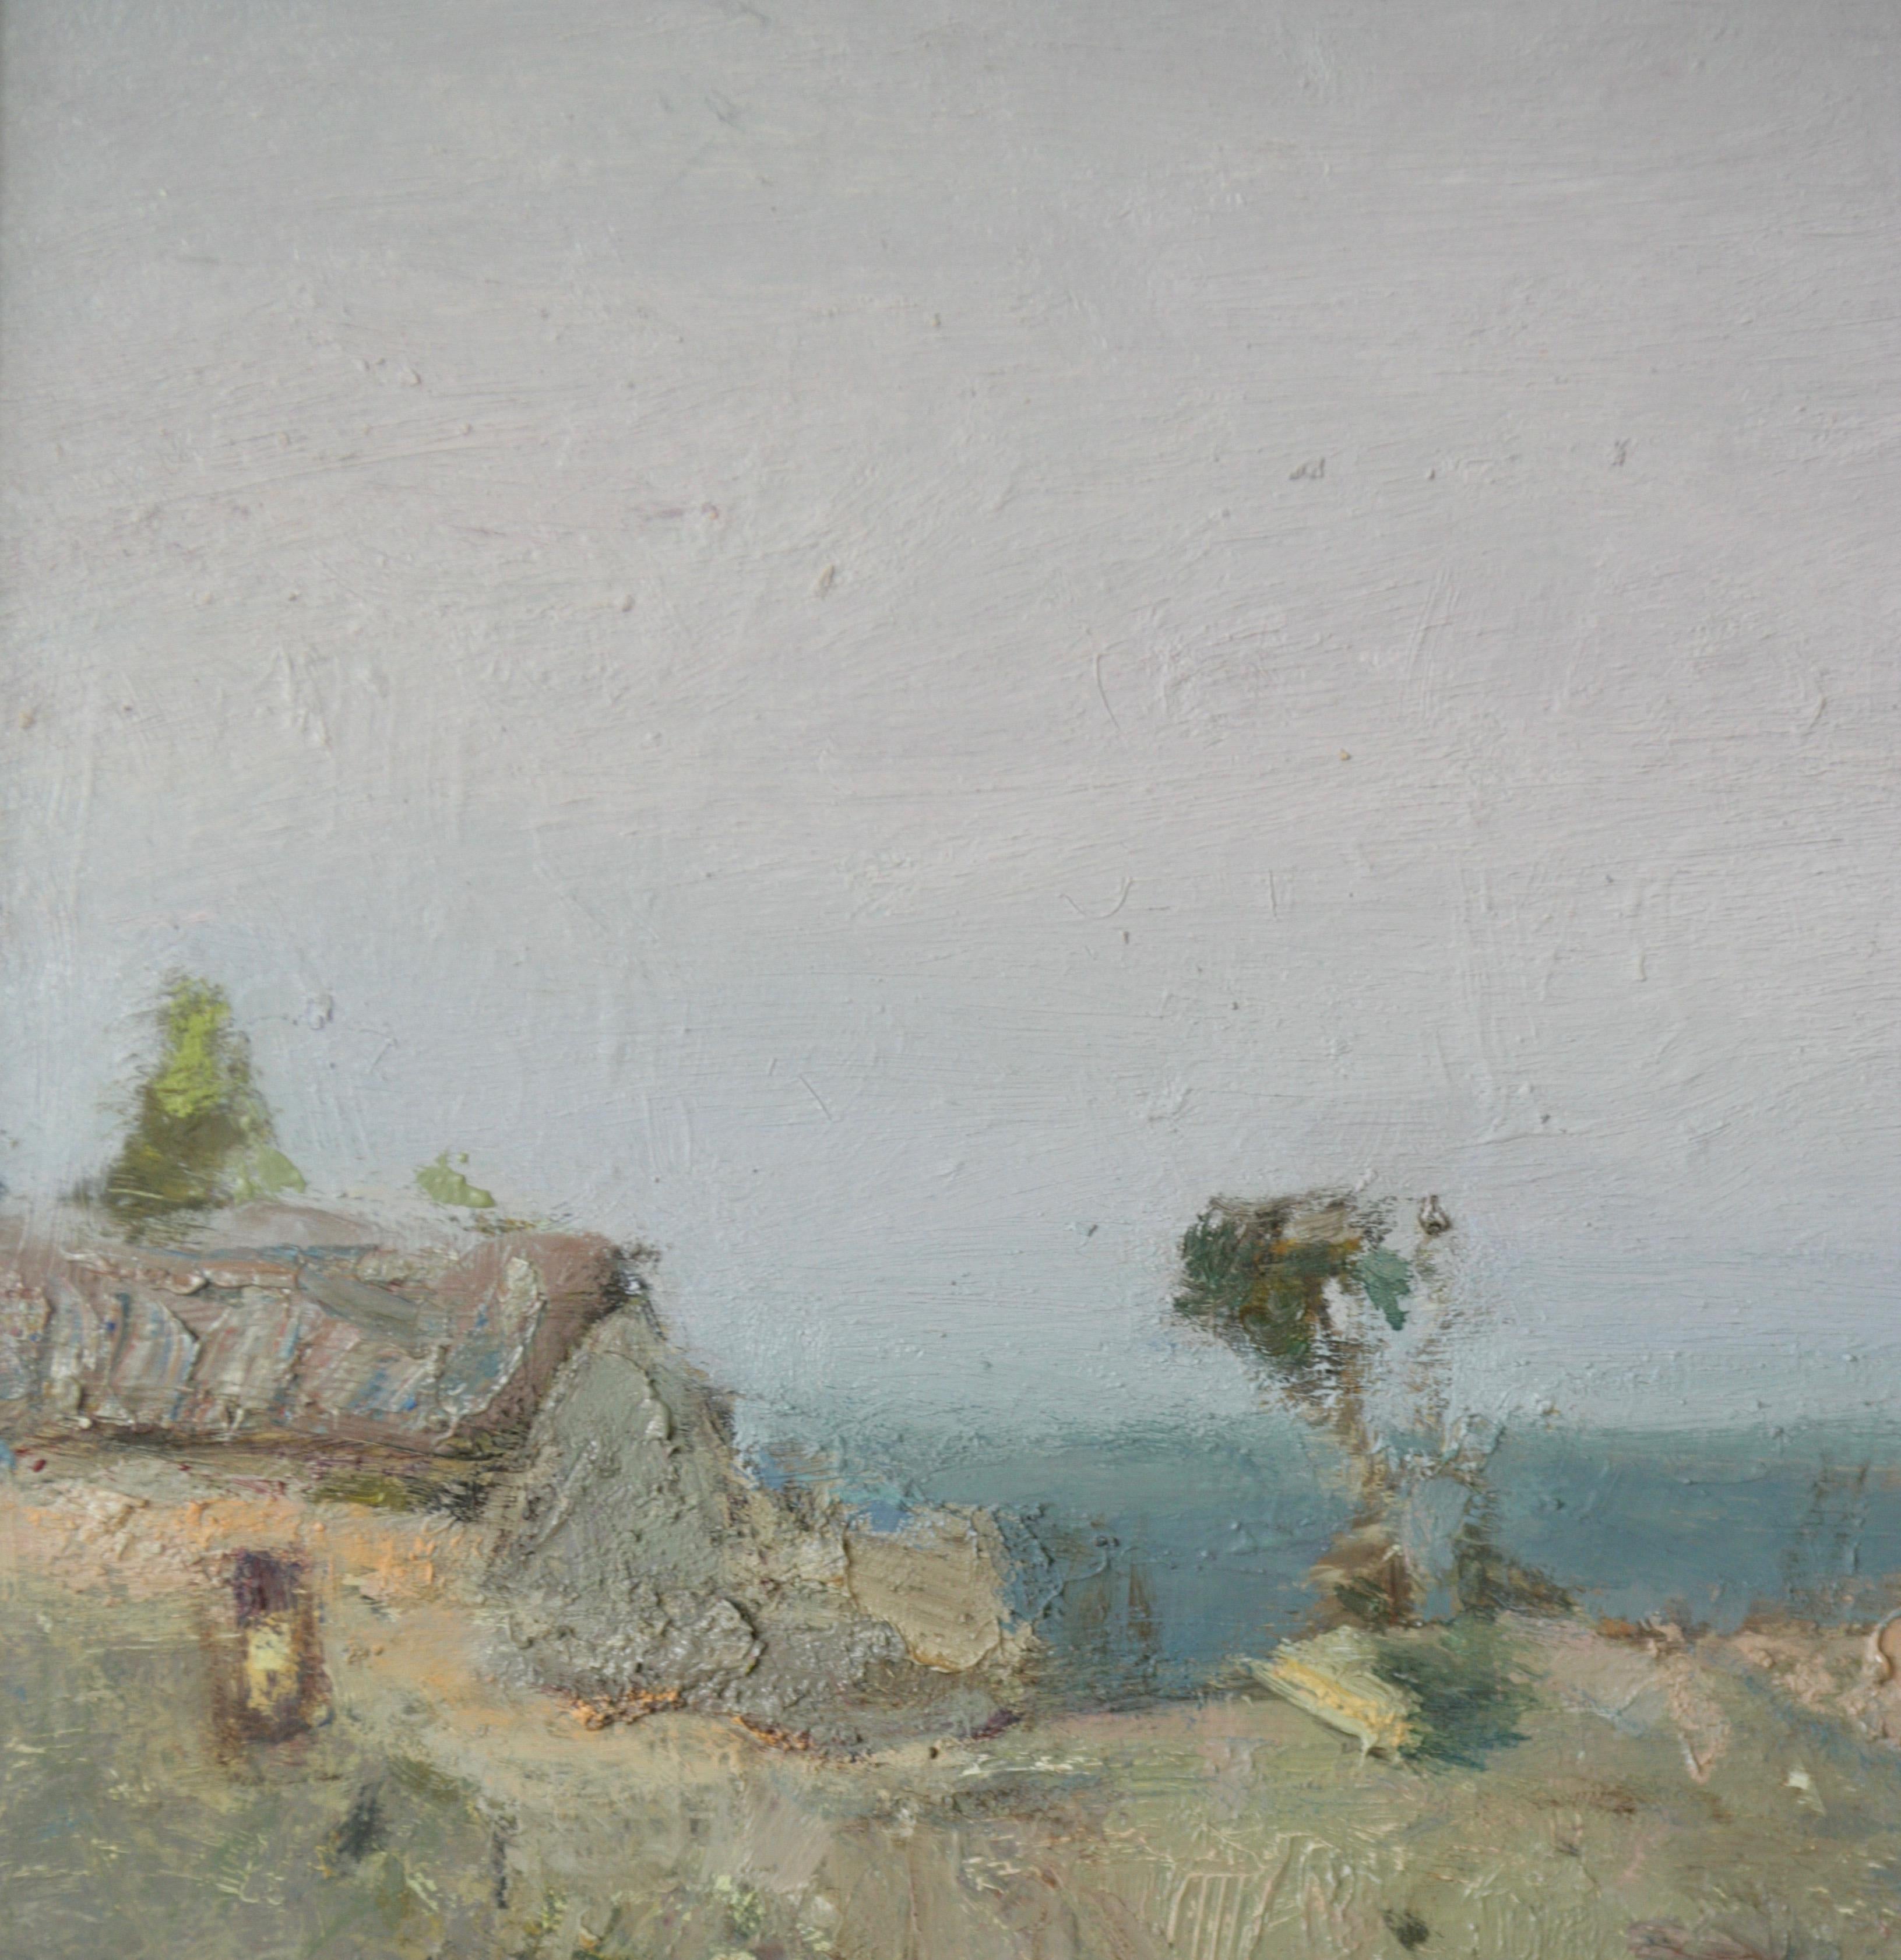 ALMOND BLOSSOM by MOONLIGHT  EDGE OF THE SEA  IGOR SHIPLIN  - Brown Landscape Painting by Igor Shiplin